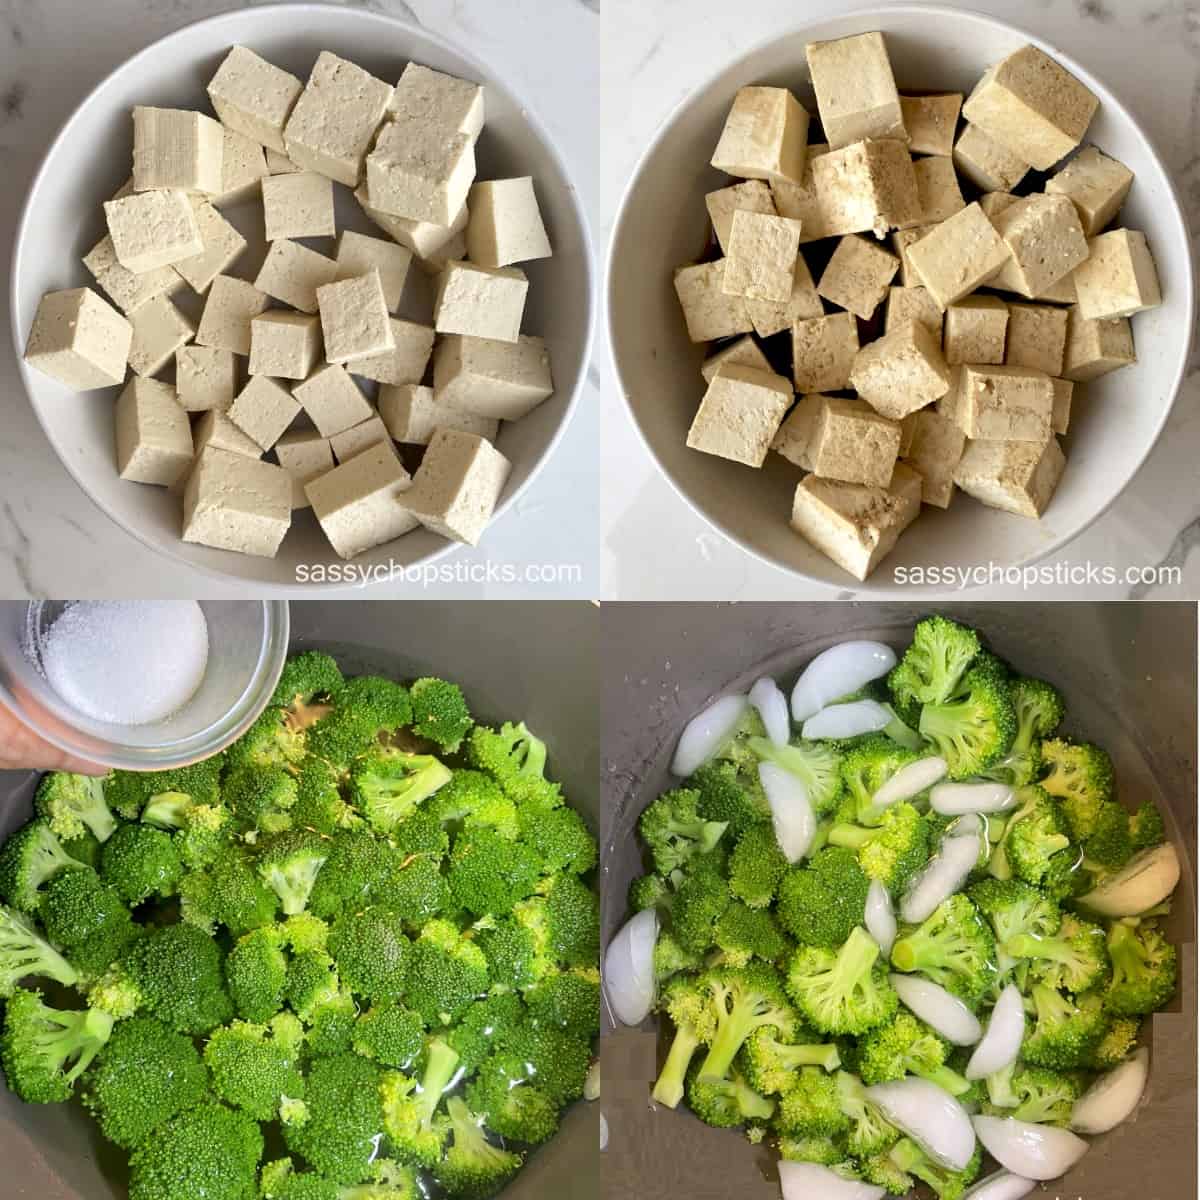 prepare tofu and broccoli 